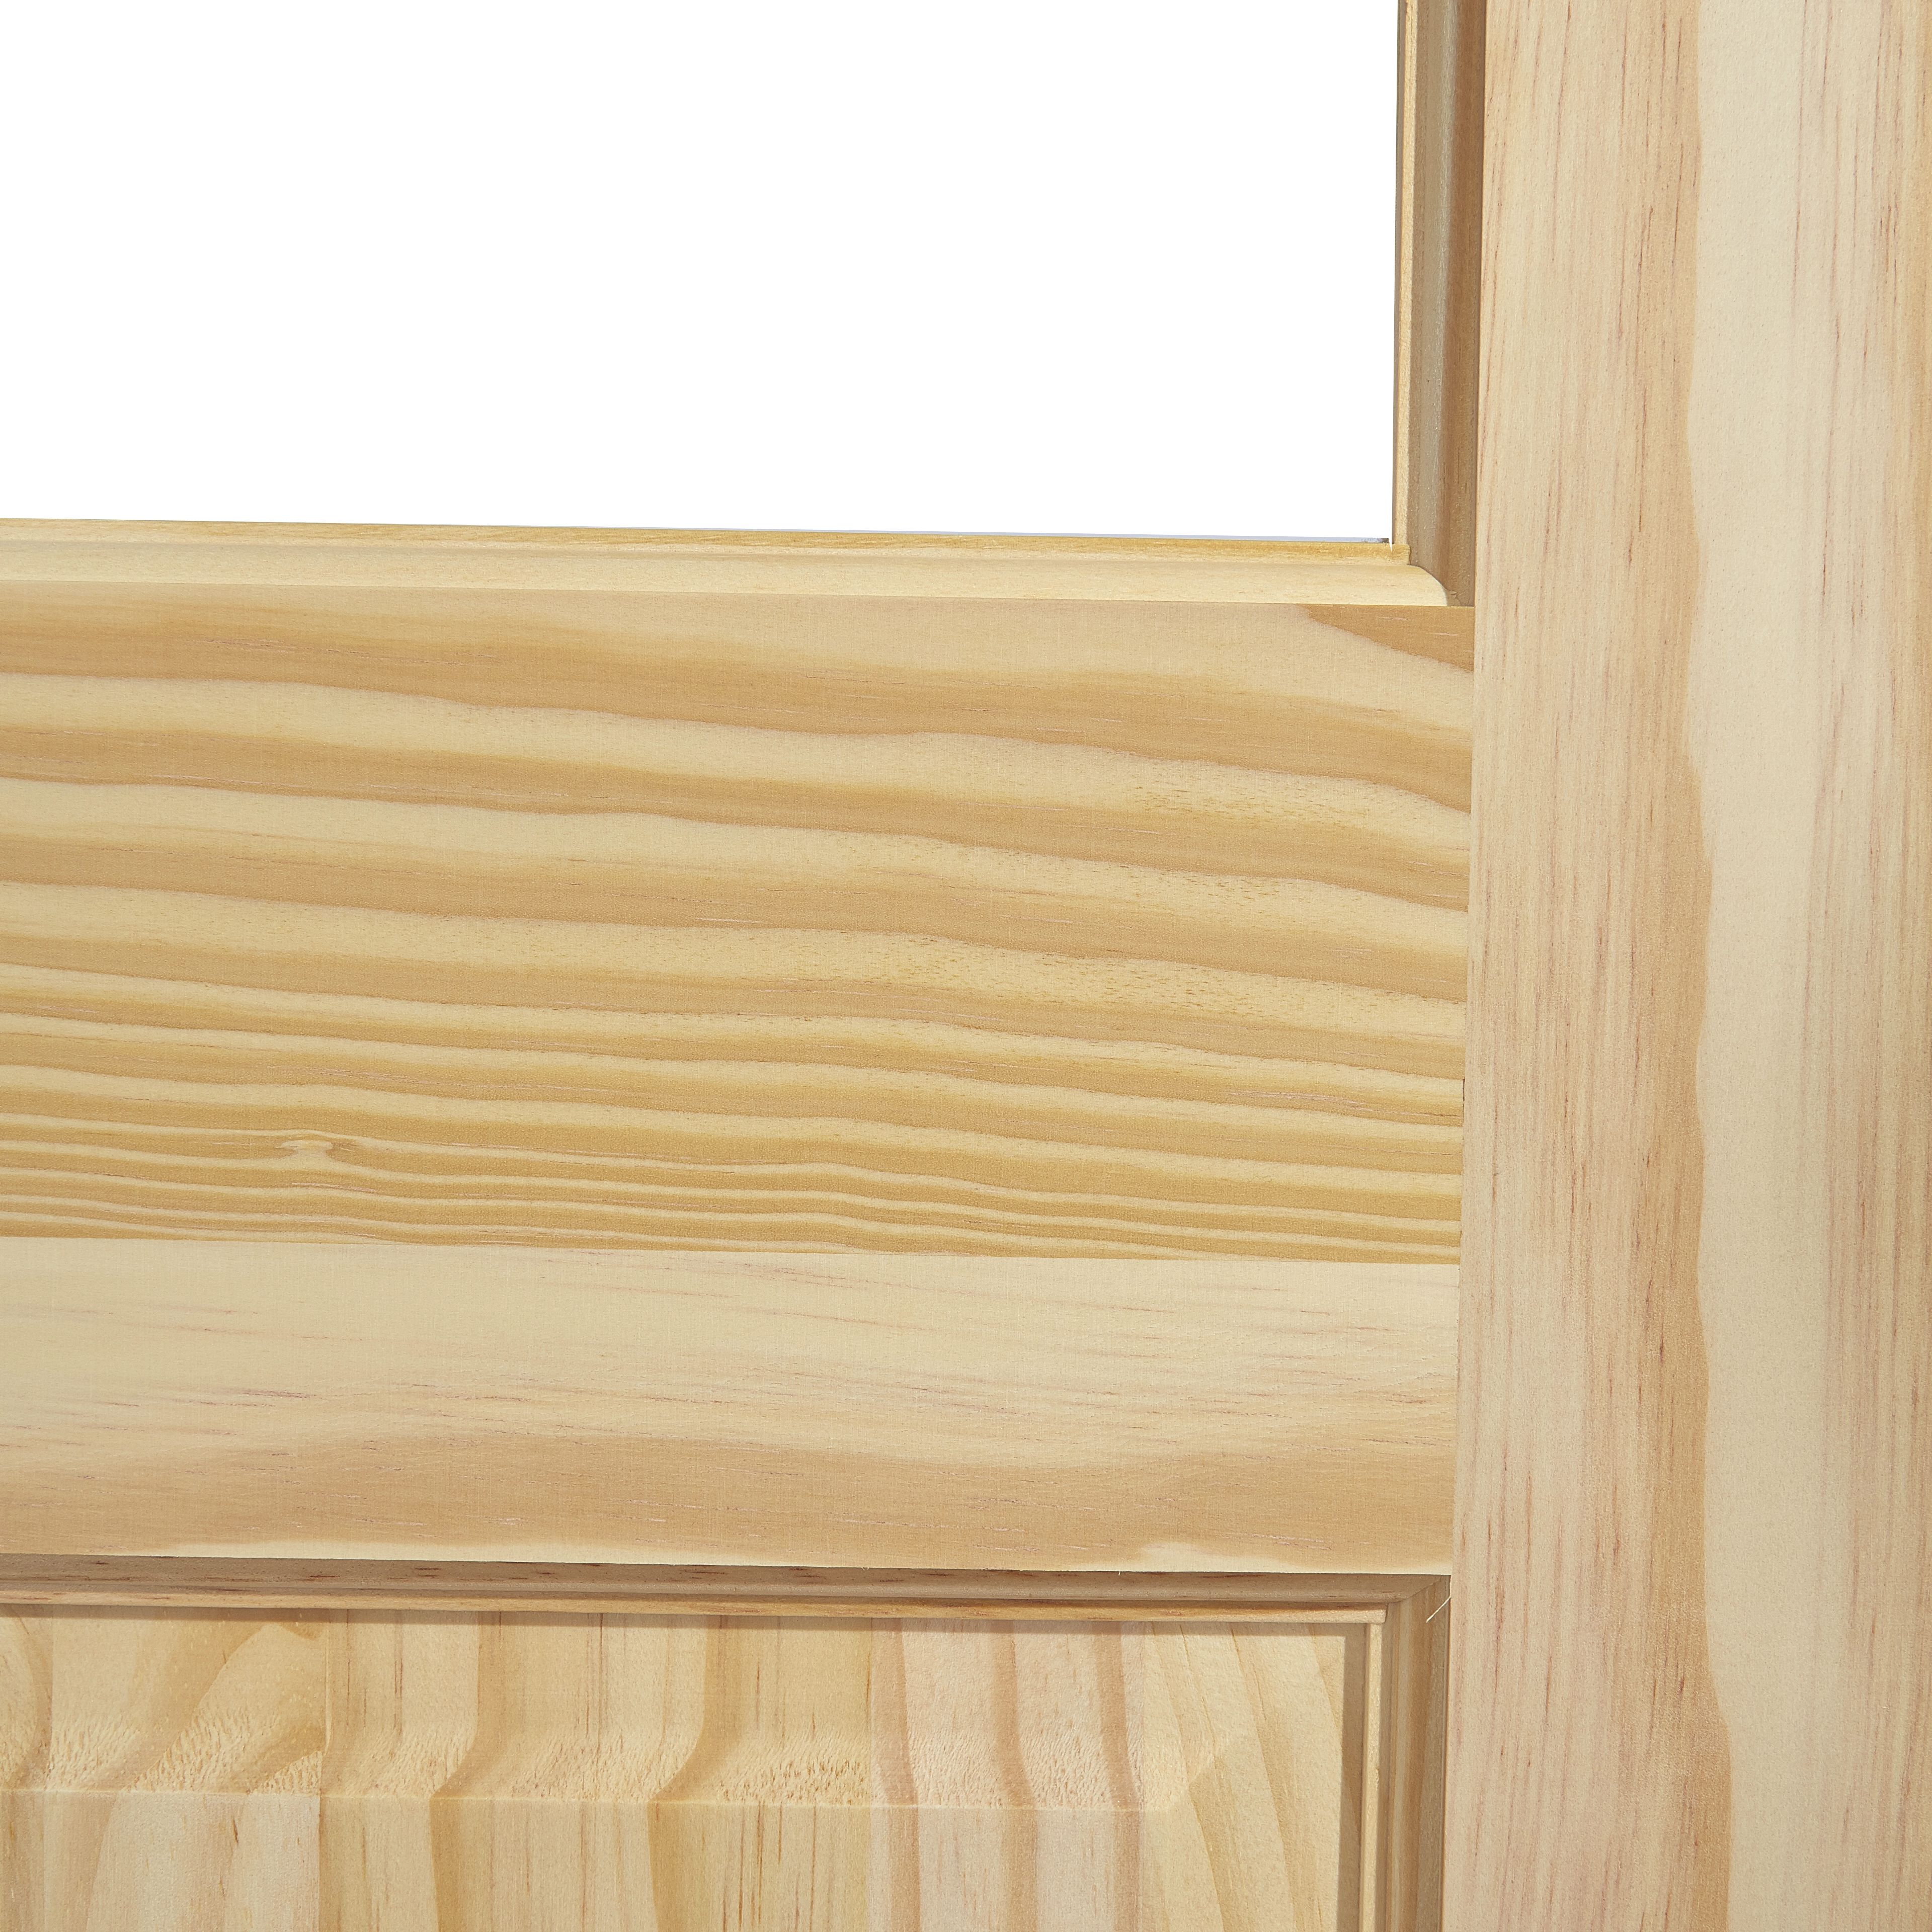 2 panel 6 Lite Clear Glazed Contemporary Pine veneer Internal Clear pine Door, (H)1981mm (W)686mm (T)35mm